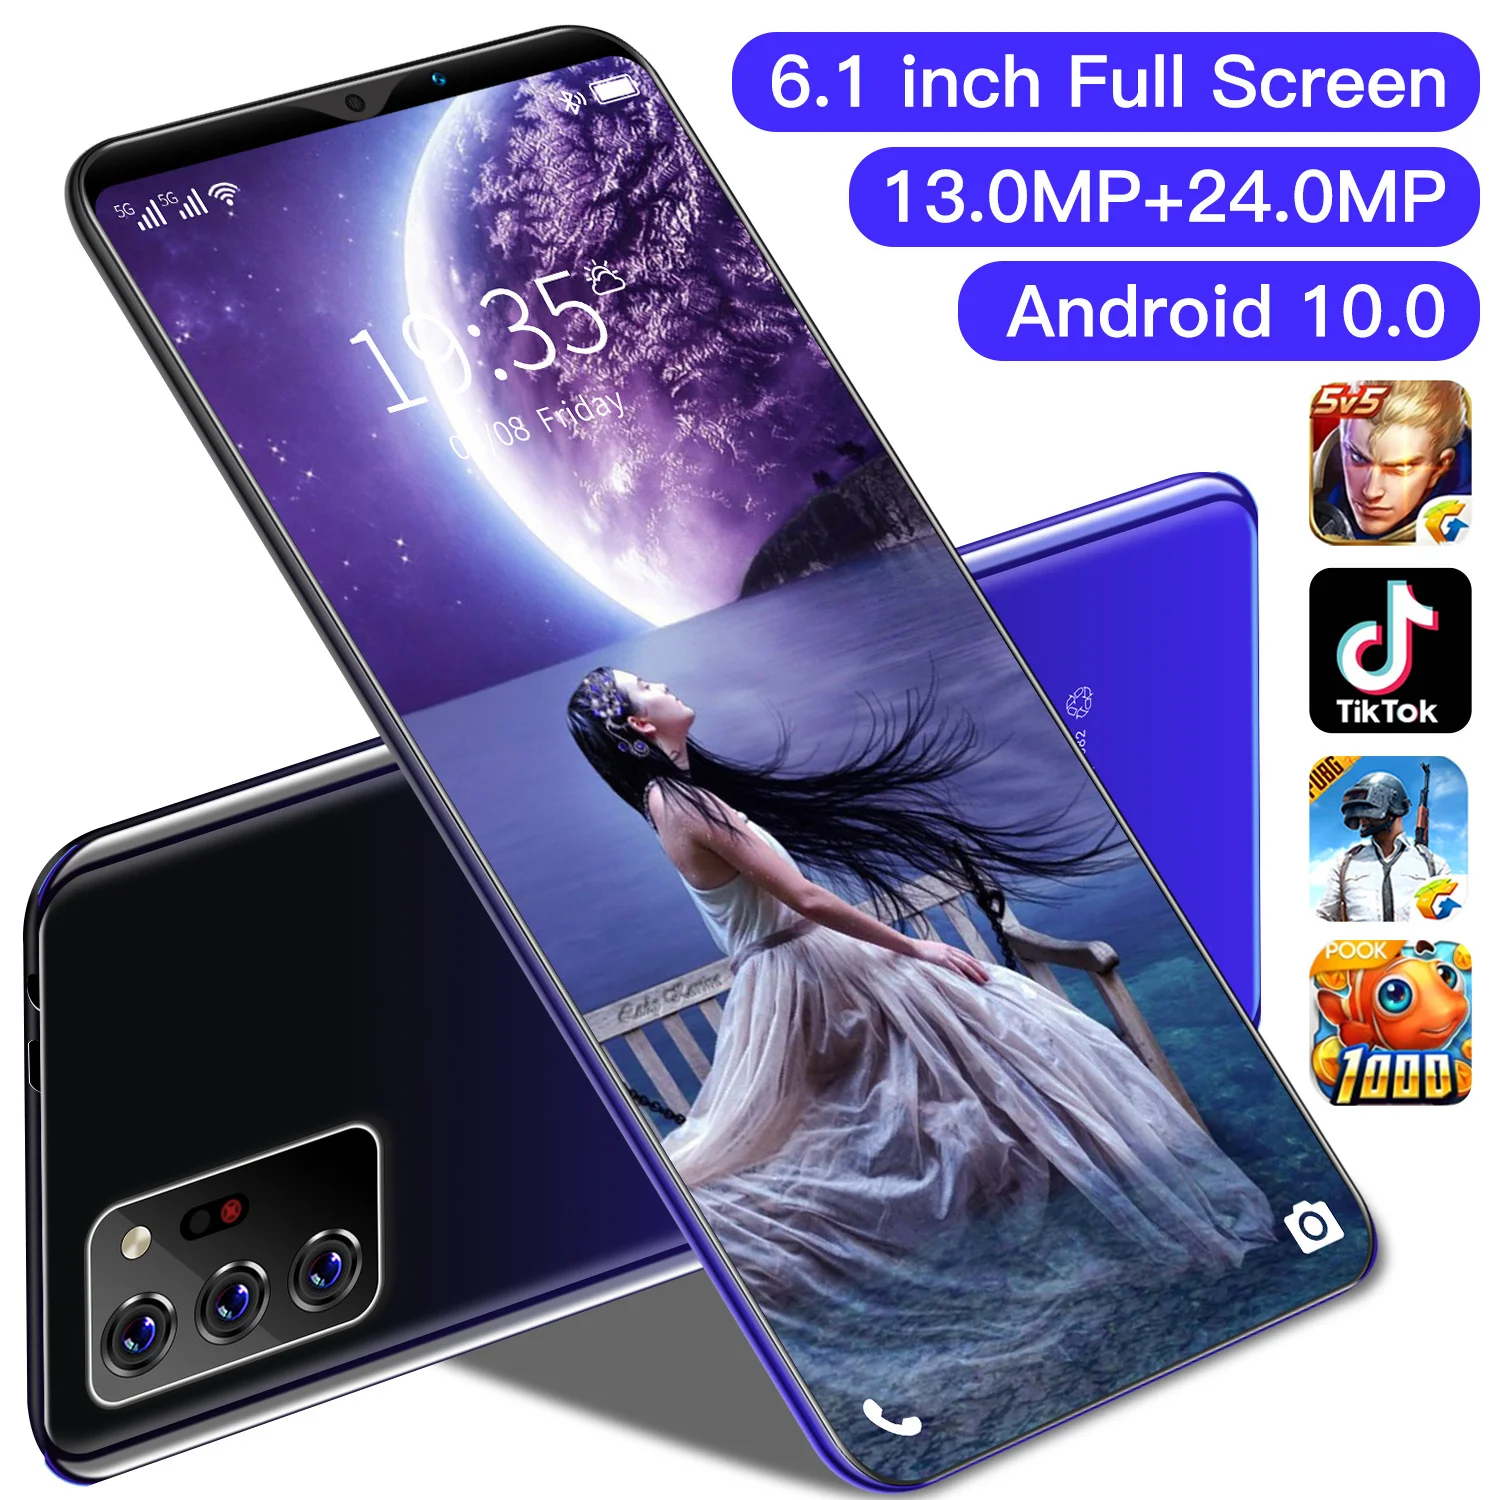 

Смартфон Note30 Plus, 6,1 дюйма, 64 ГБ/128 ГБ, 13 + 24 МП, 10 ядер, Android 10,0, две SIM-карты + Micro SD, сканер отпечатка пальца, 4800 мАч